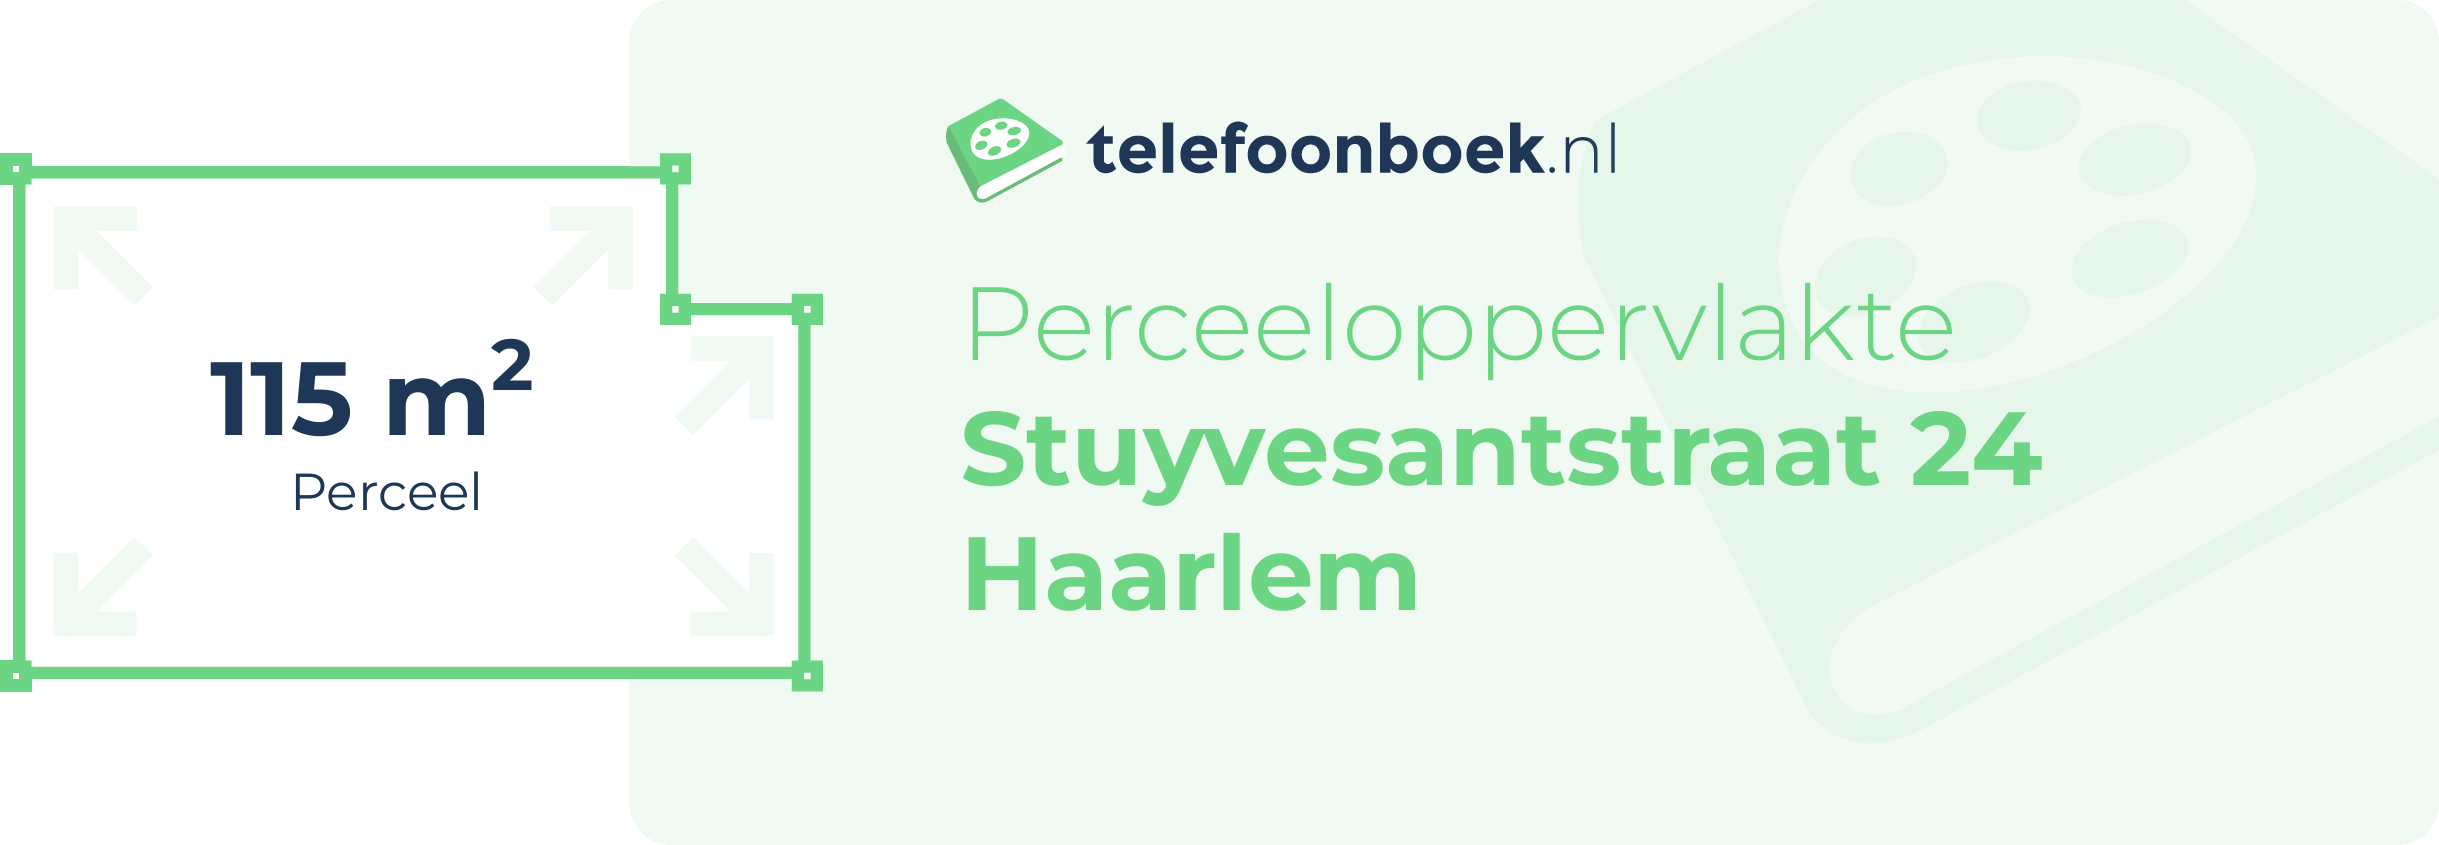 Perceeloppervlakte Stuyvesantstraat 24 Haarlem